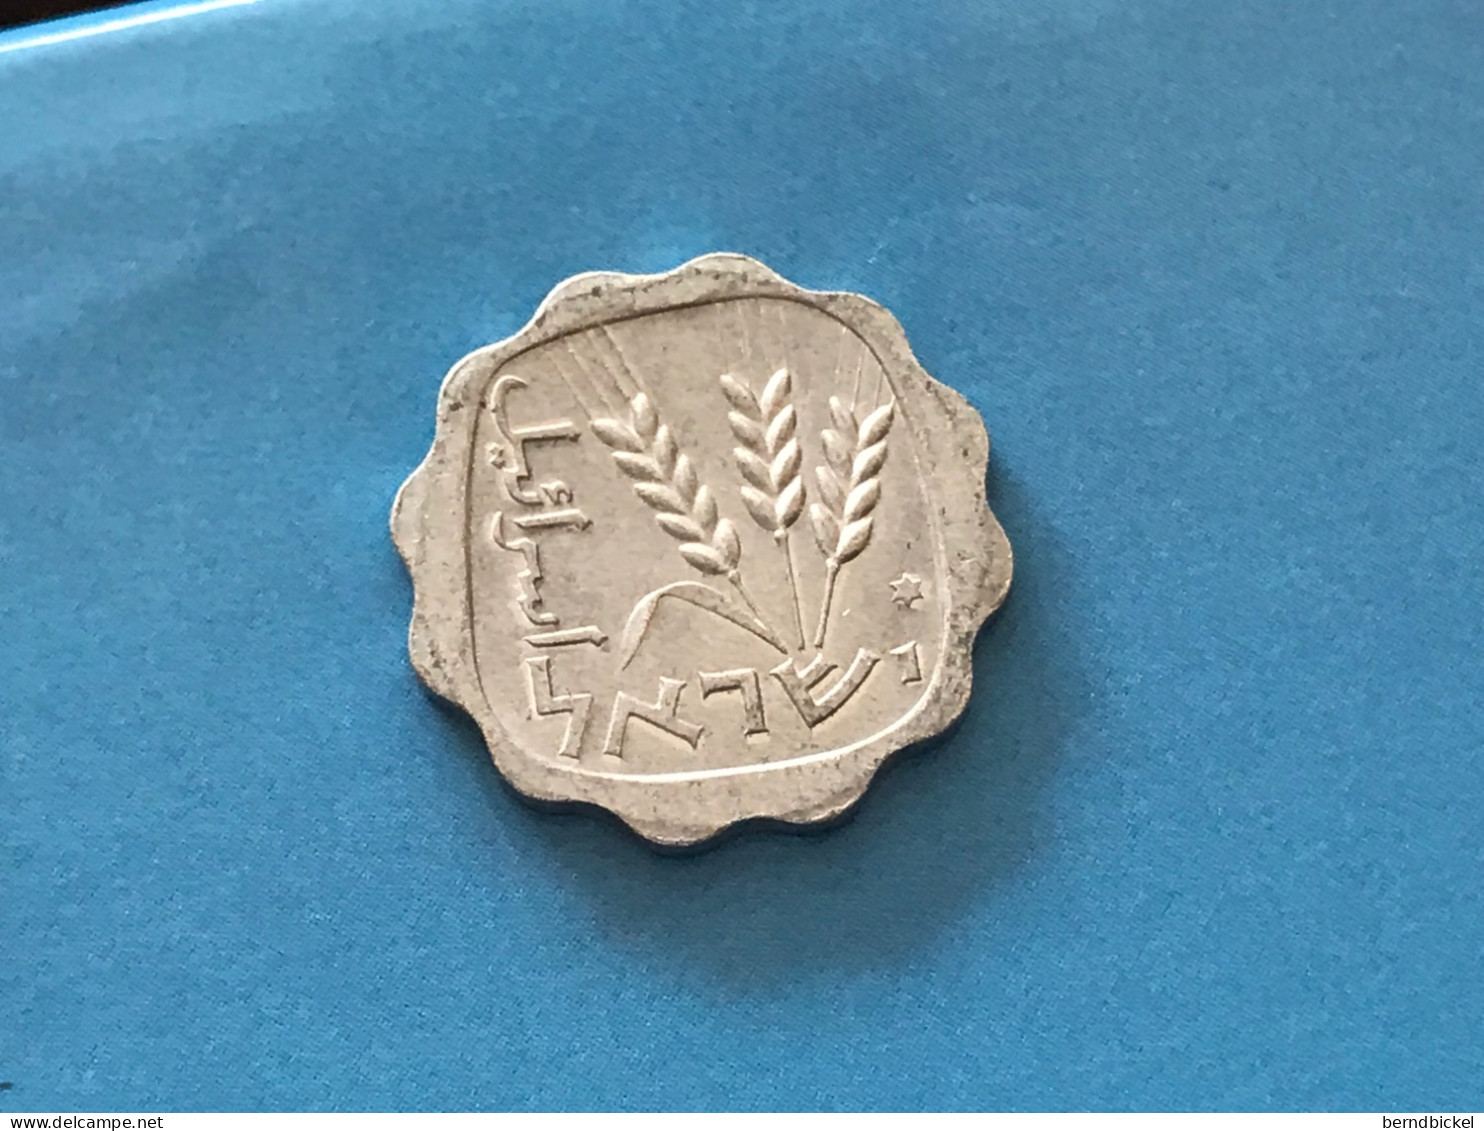 Münze Münzen Umlaufmünze Israel 1 Agorot 1961 - Israel